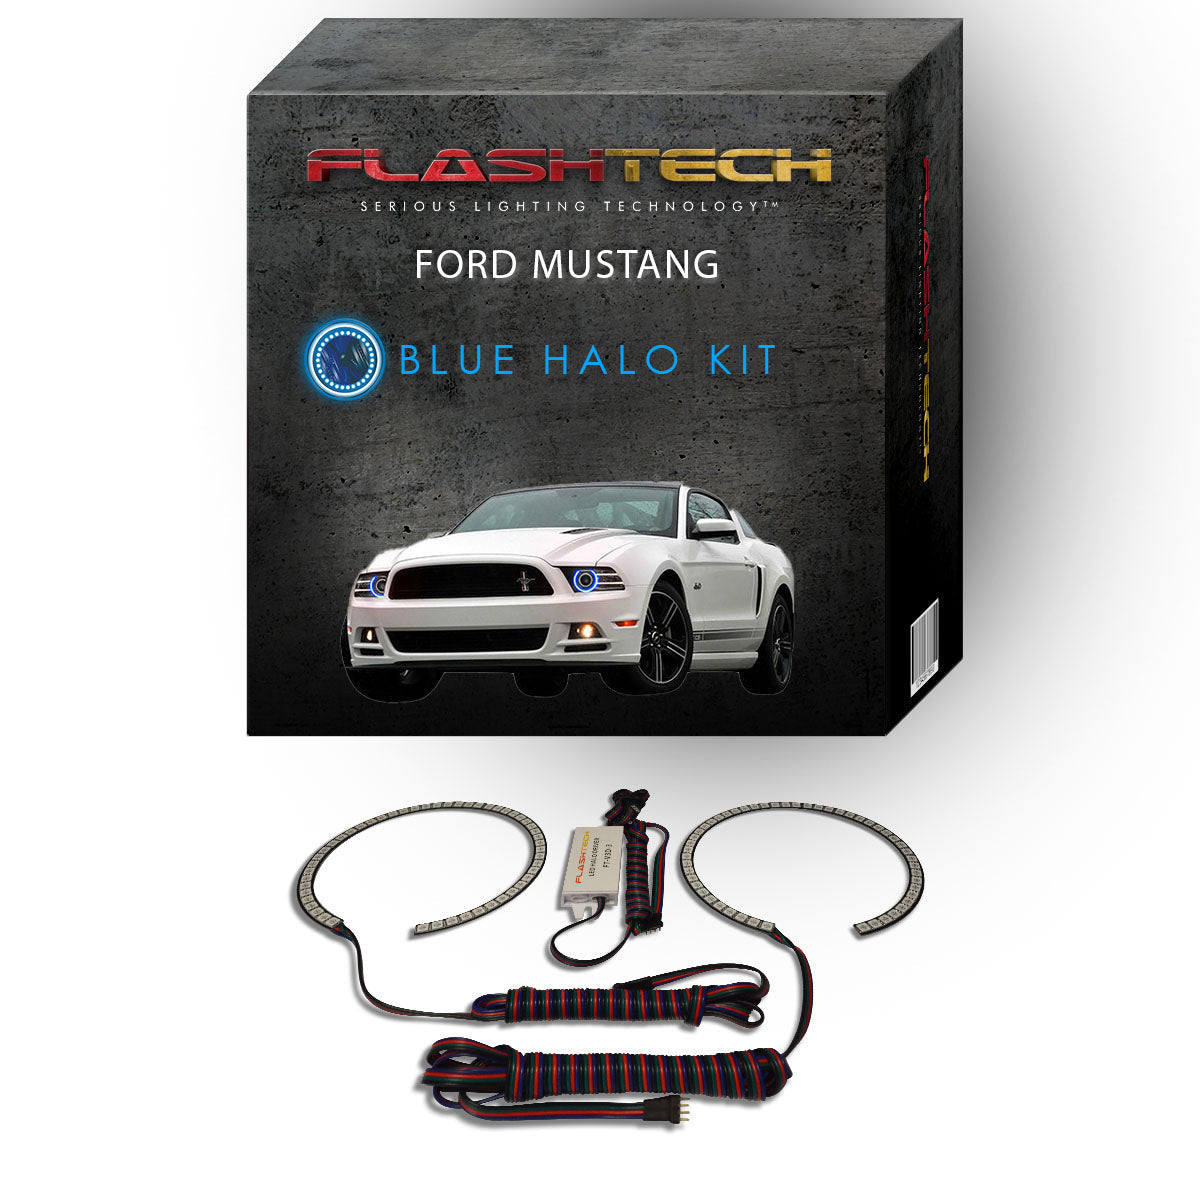 Ford-Mustang-2010, 2011, 2012, 2013, 2014-LED-Halo-Headlights-RGB-No Remote-FO-MUP1014-V3H